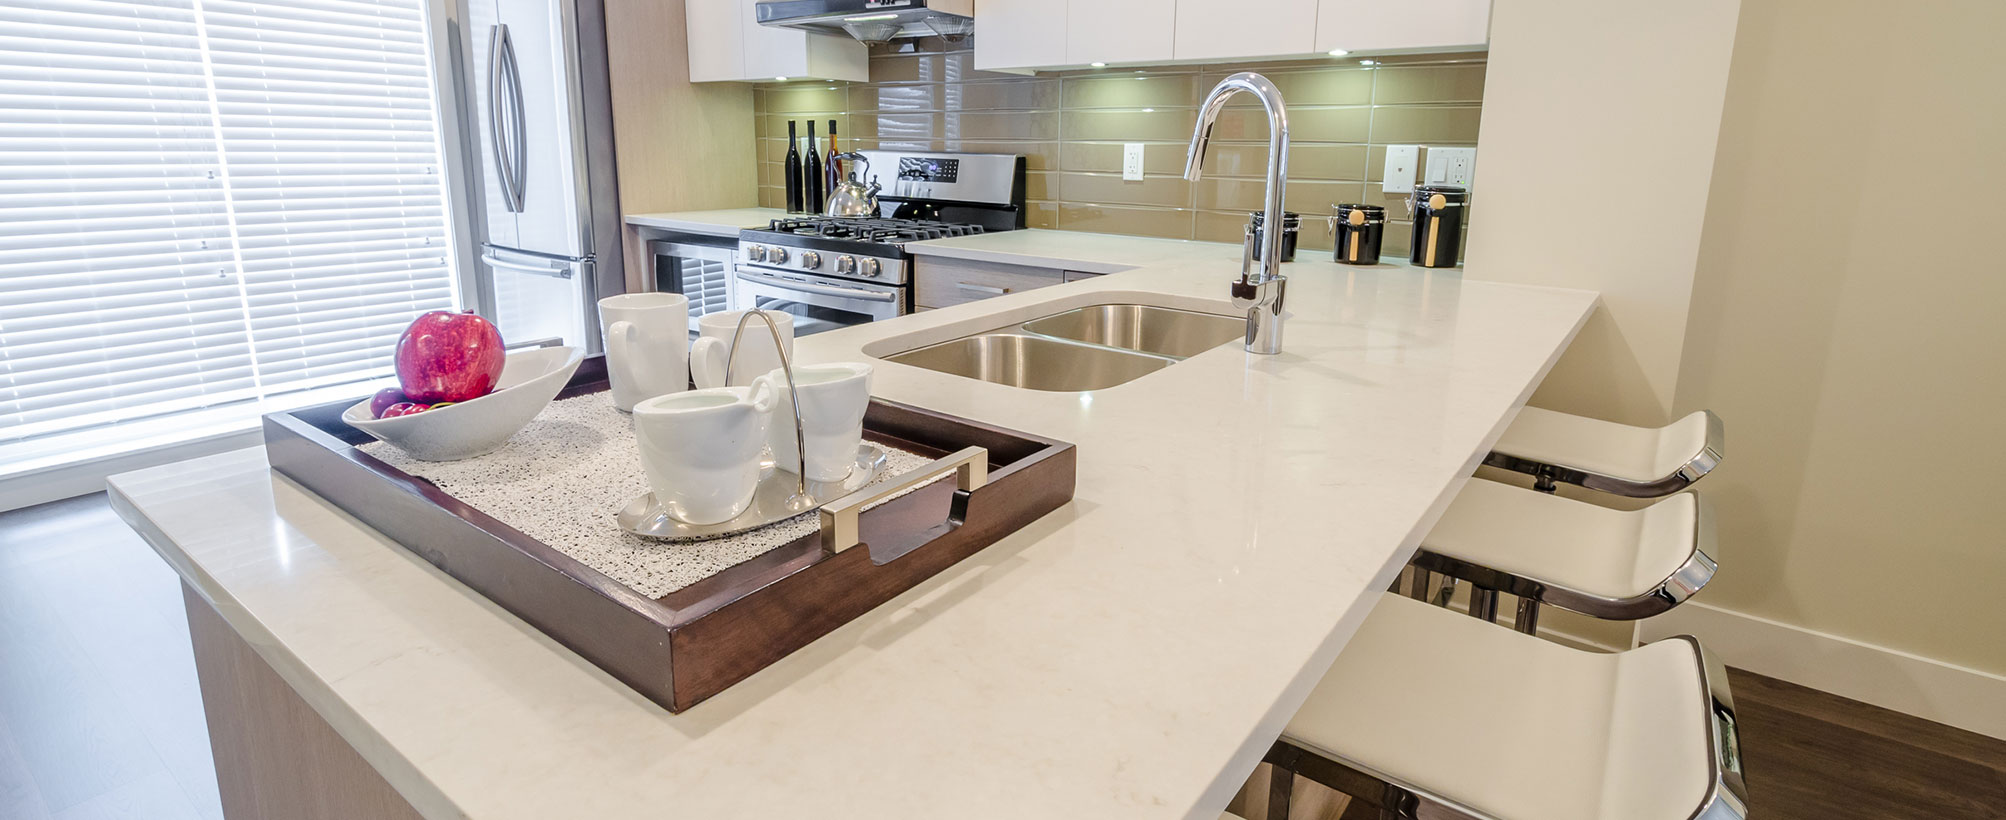 Classic Granite Kitchen Countertops Richmond Va